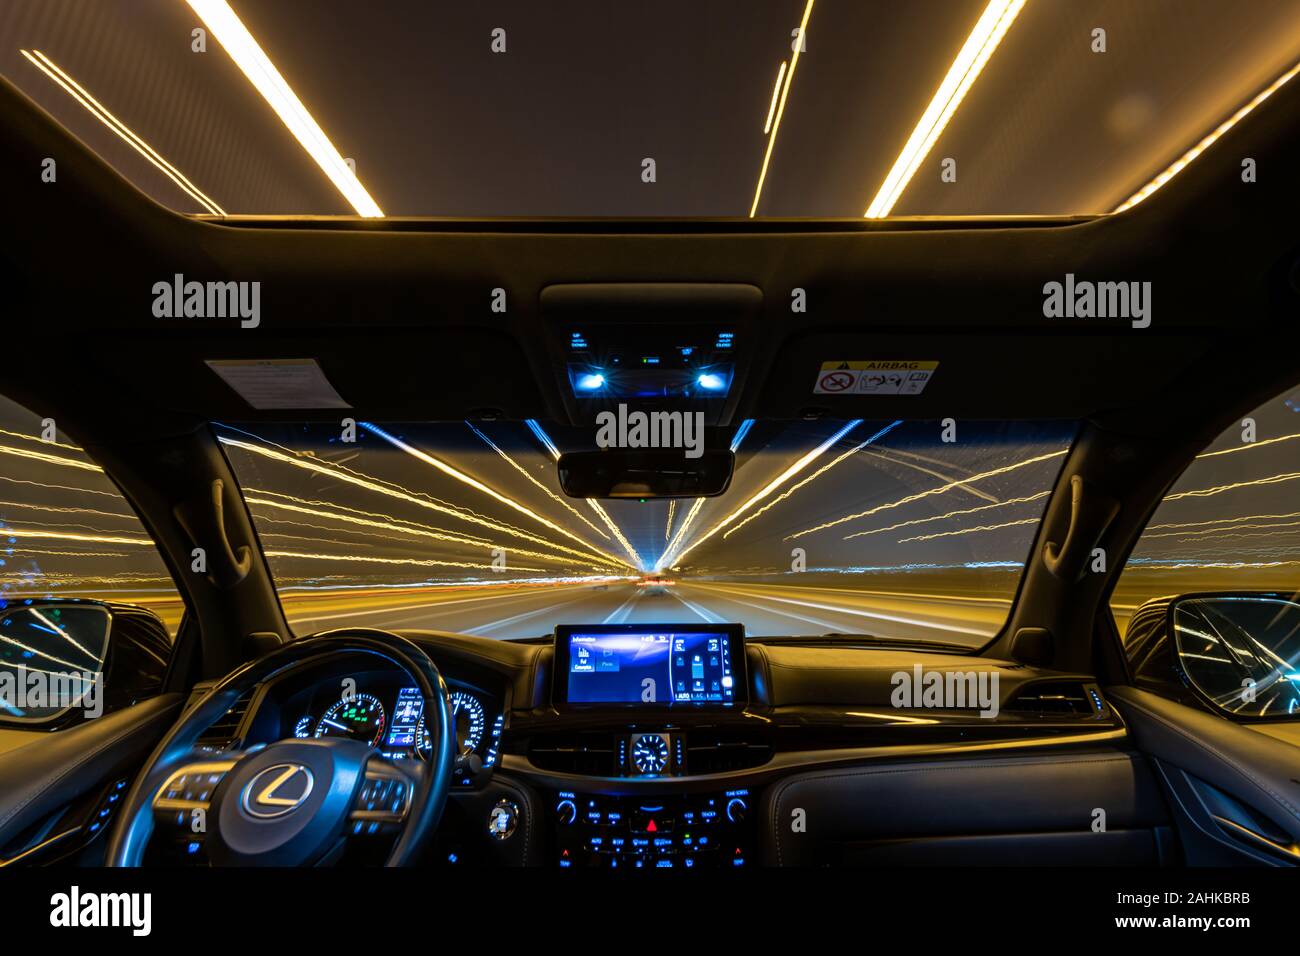 New Model 2020 2020 Lexus Lx 570 Interior